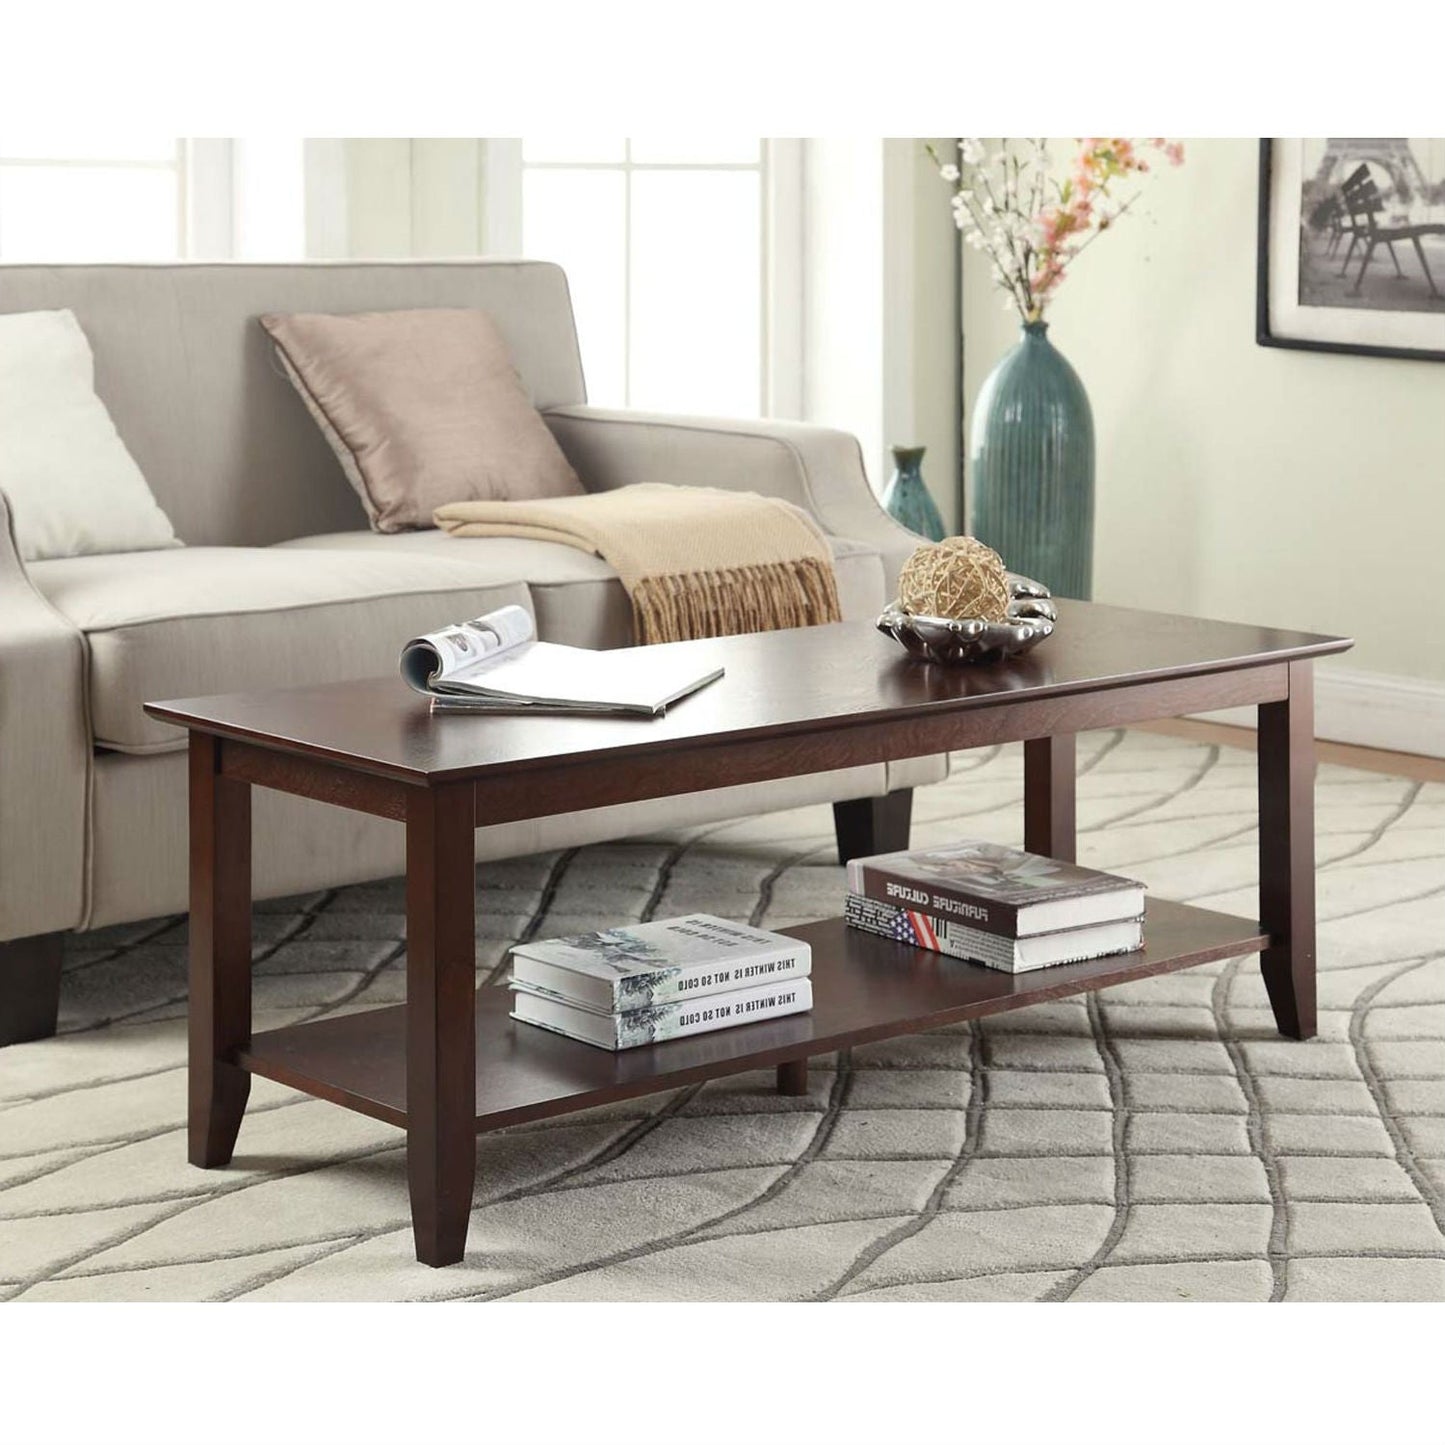 Living Room > Coffee Tables - Eco-Friendly Espresso Wood Coffee Table With Bottom Shelf